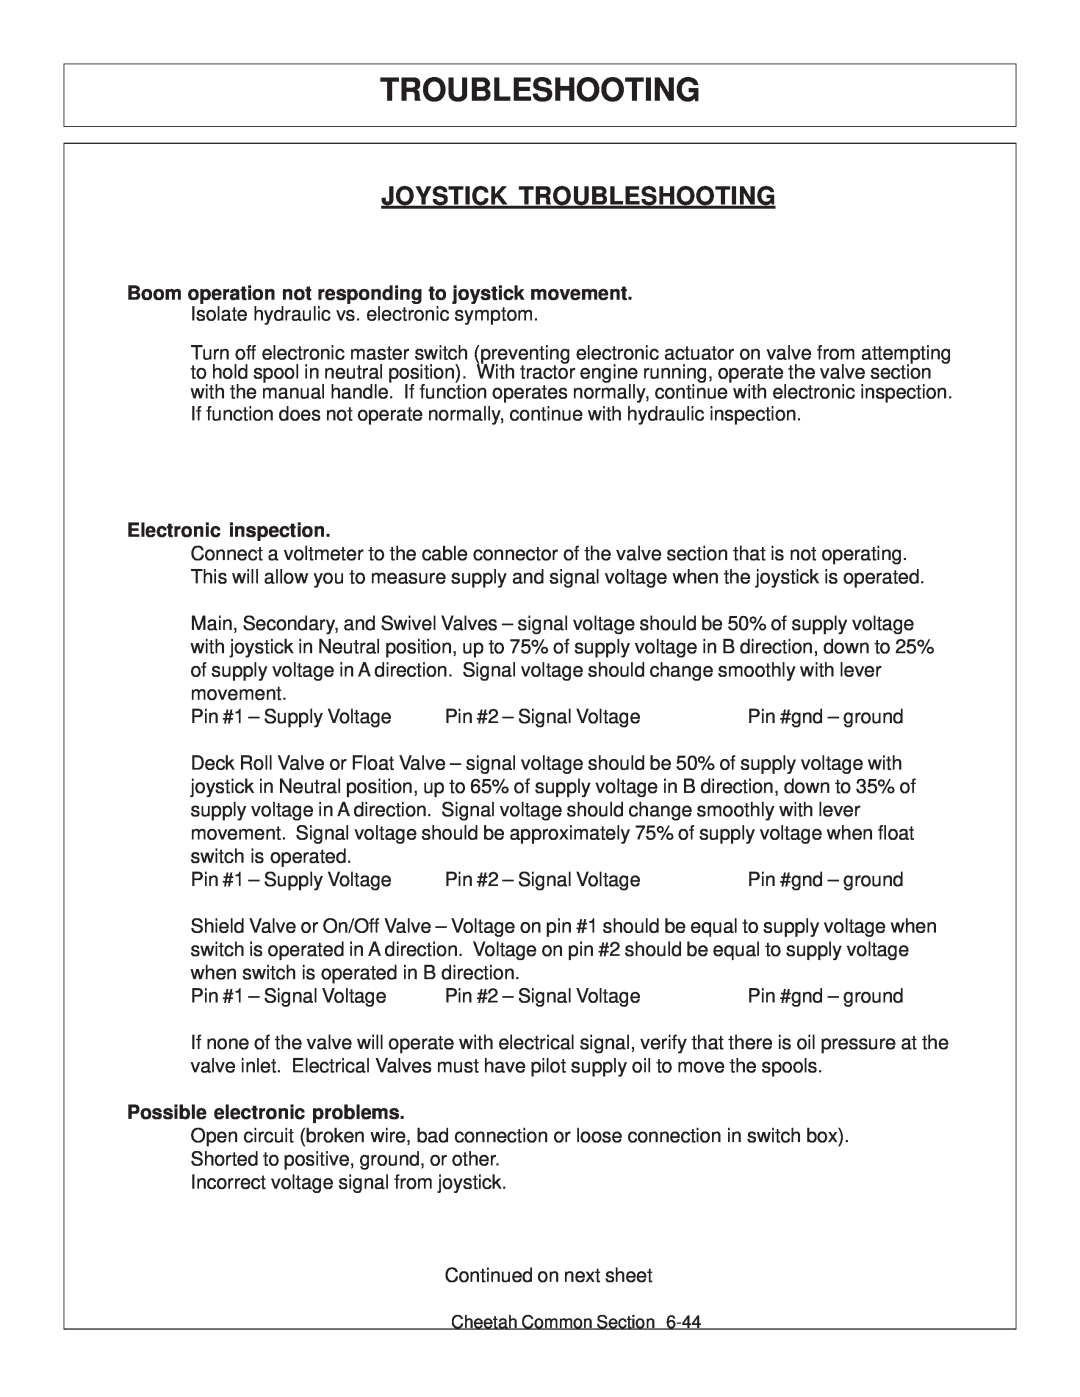 Tiger Products Co., Ltd JD 5083E manual Joystick Troubleshooting, Boom operation not responding to joystick movement 